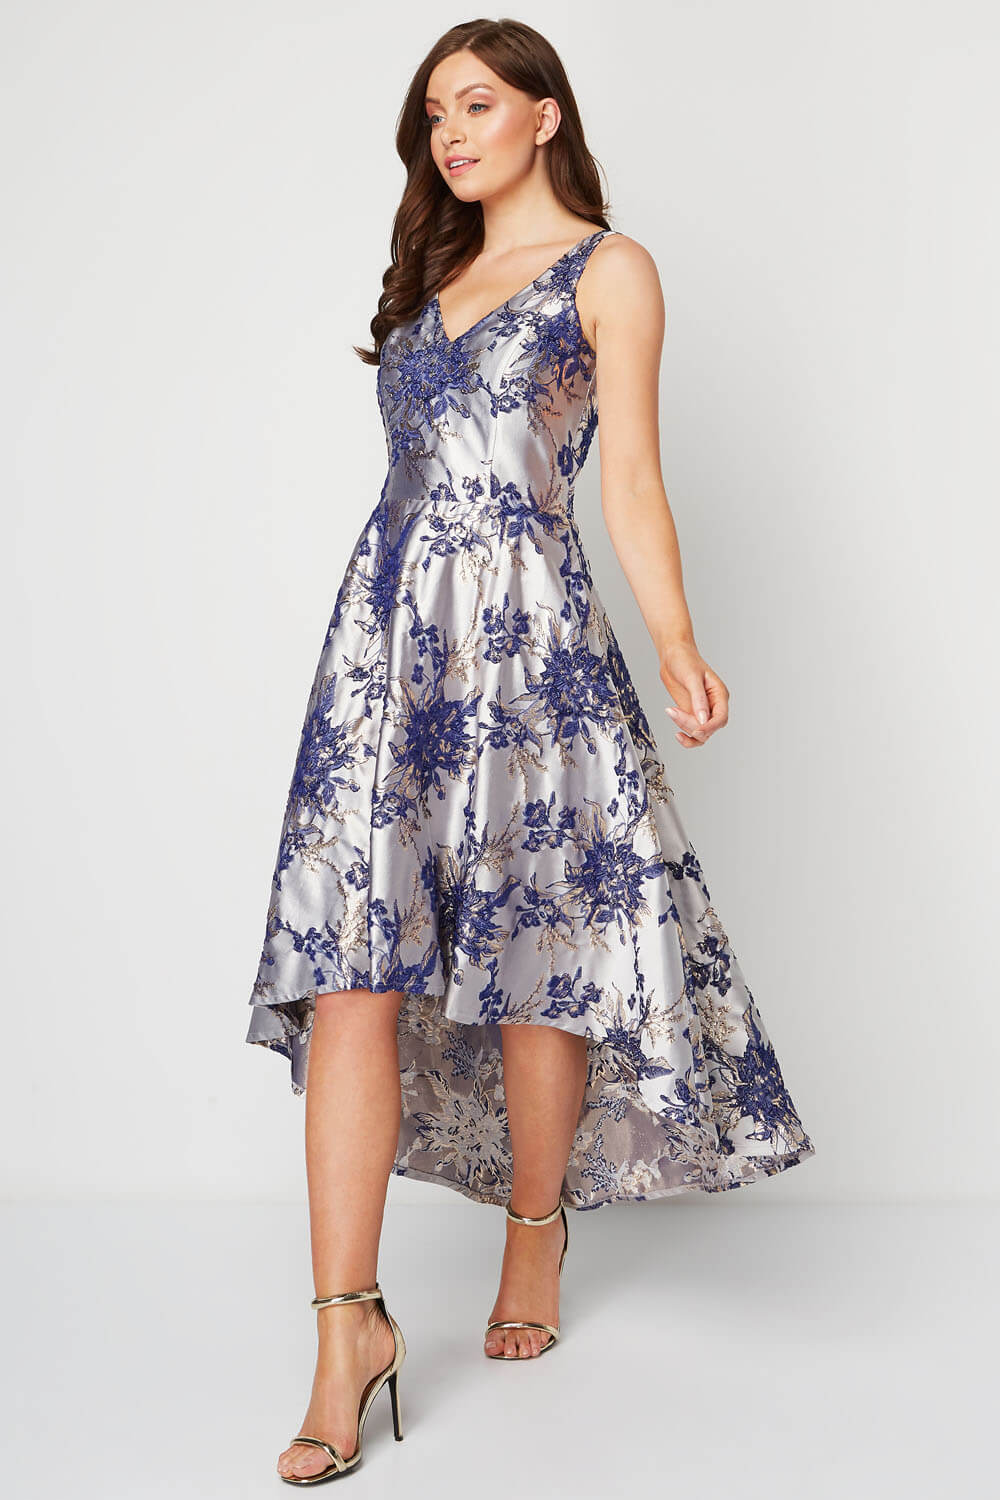 Royal Blue Floral Jacquard Gown Dress, Image 2 of 5